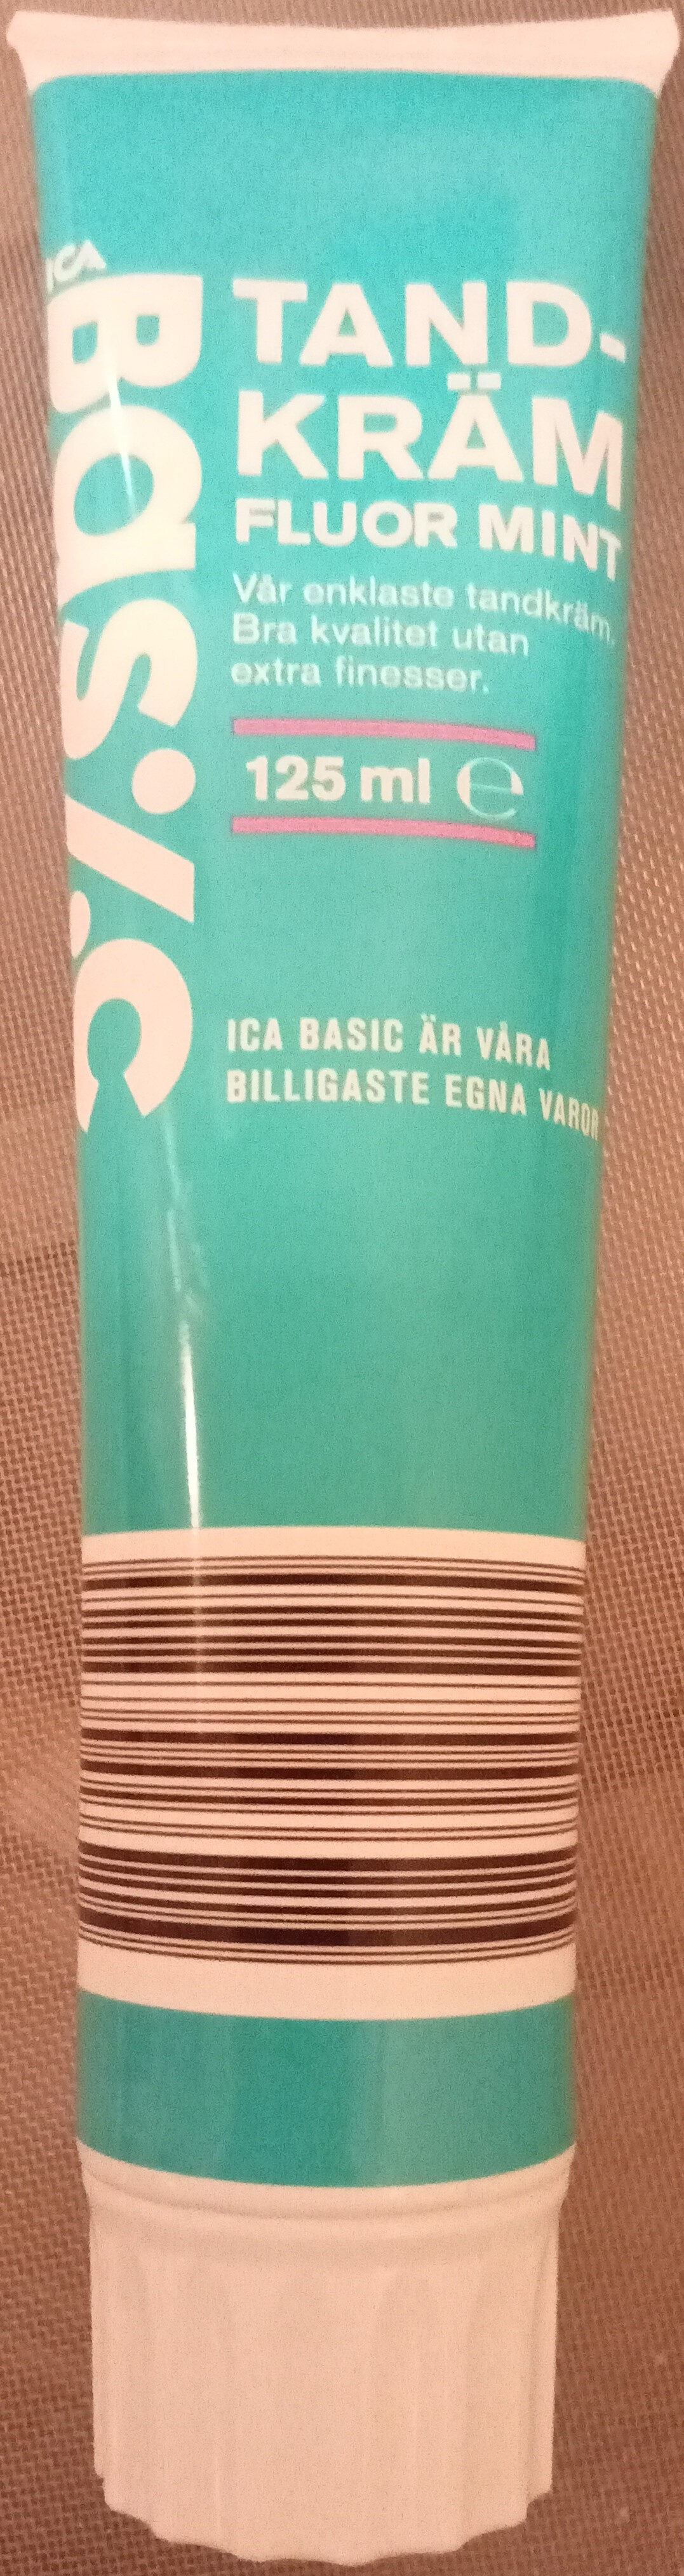 ICA Basic Tandkräm, Fluor mint - Product - sv